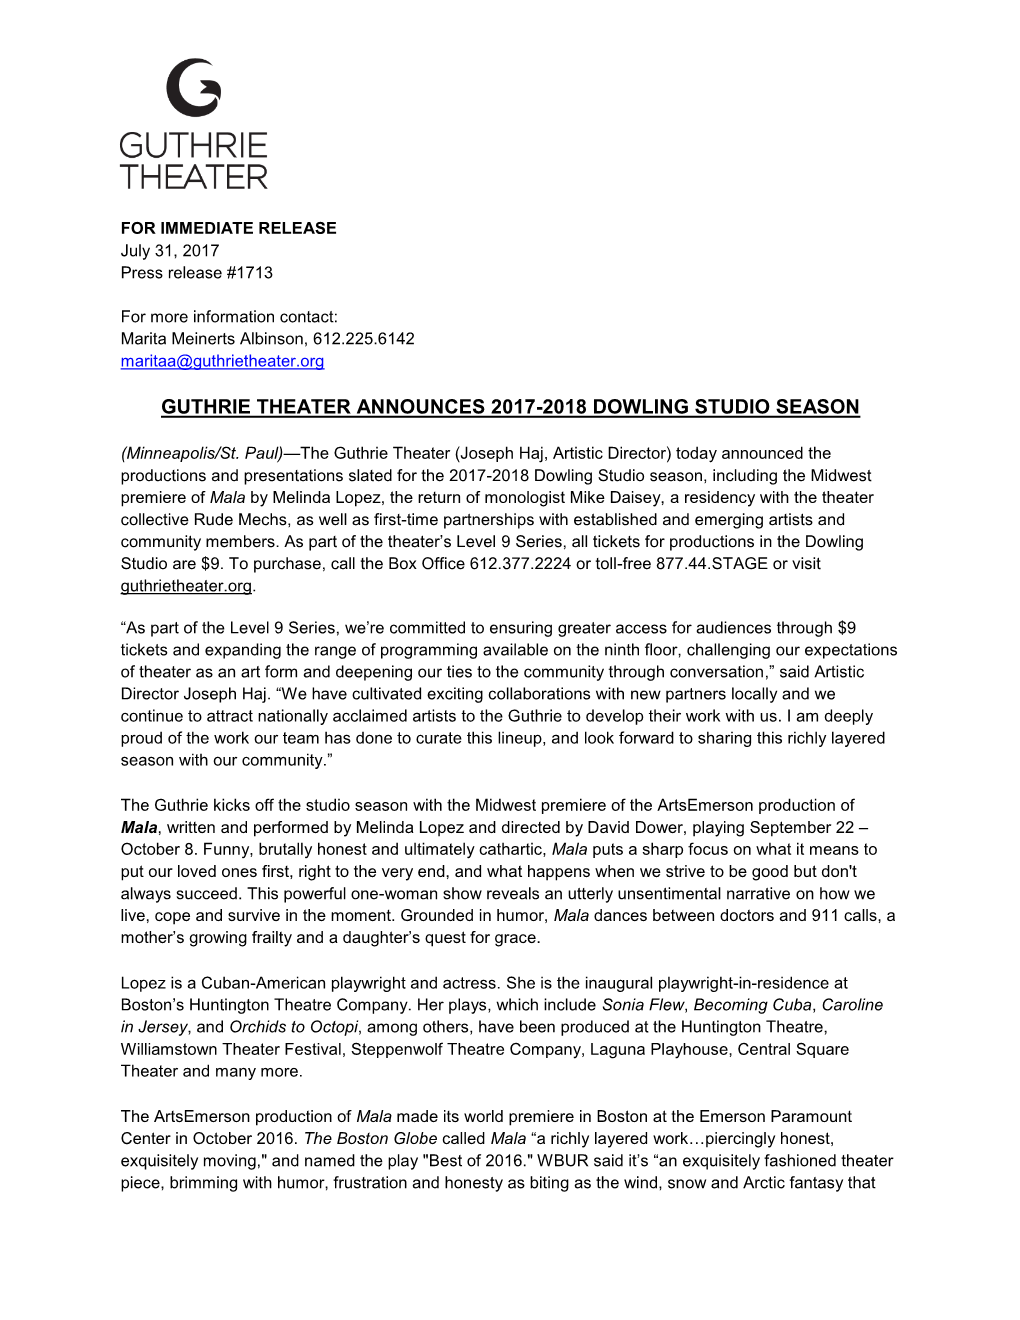 Guthrie Theater Announces 2017-2018 Dowling Studio Season